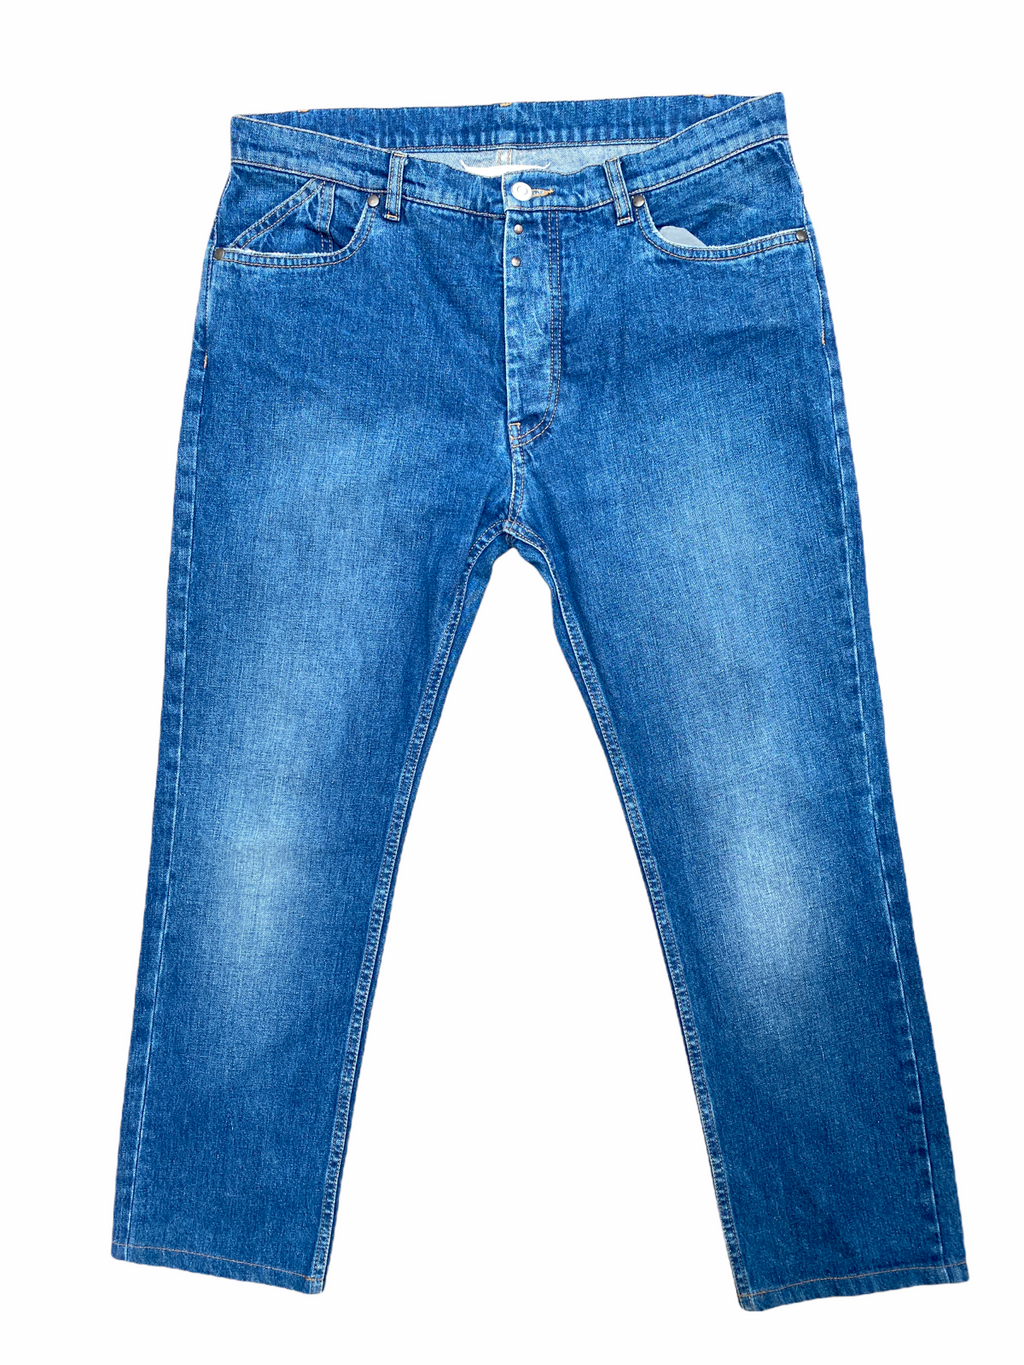 Blue denim jeans Slim Fit  Superb fades Size 48 US 32